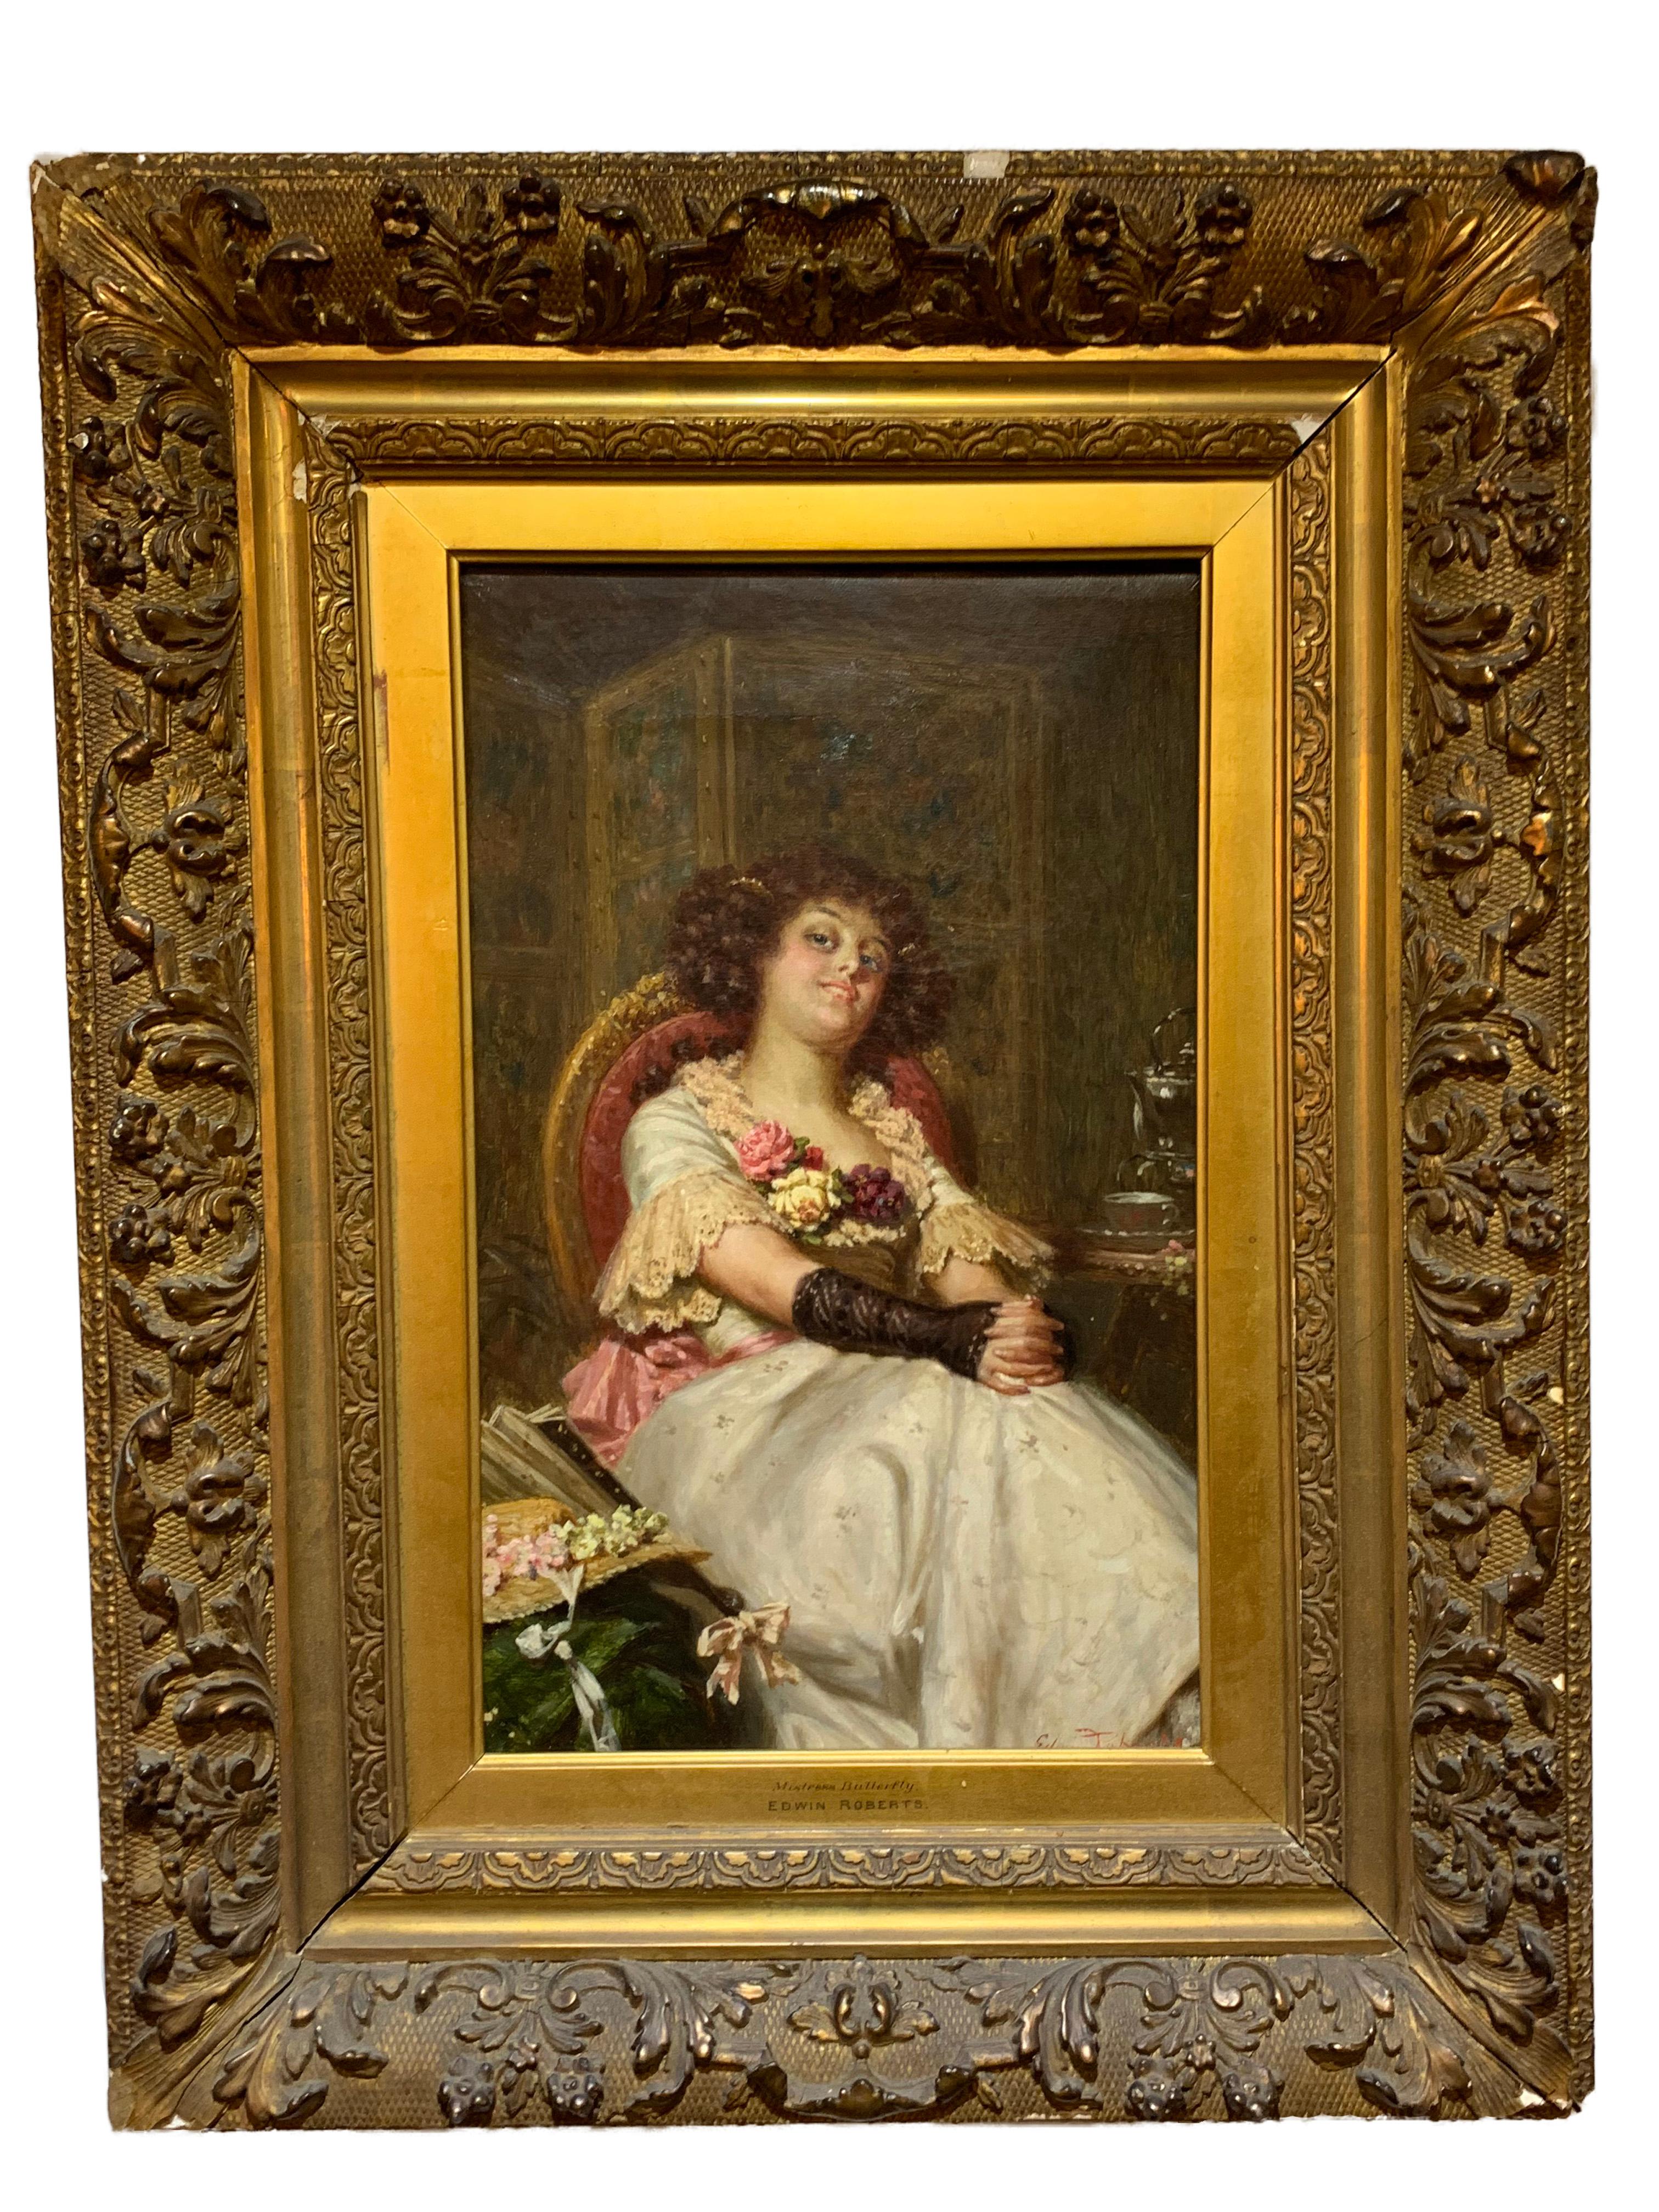 Edwin Thomas Roberts Portrait Painting - Pre-Raphaelite English Realist Oil Painting of a Mistress Lady